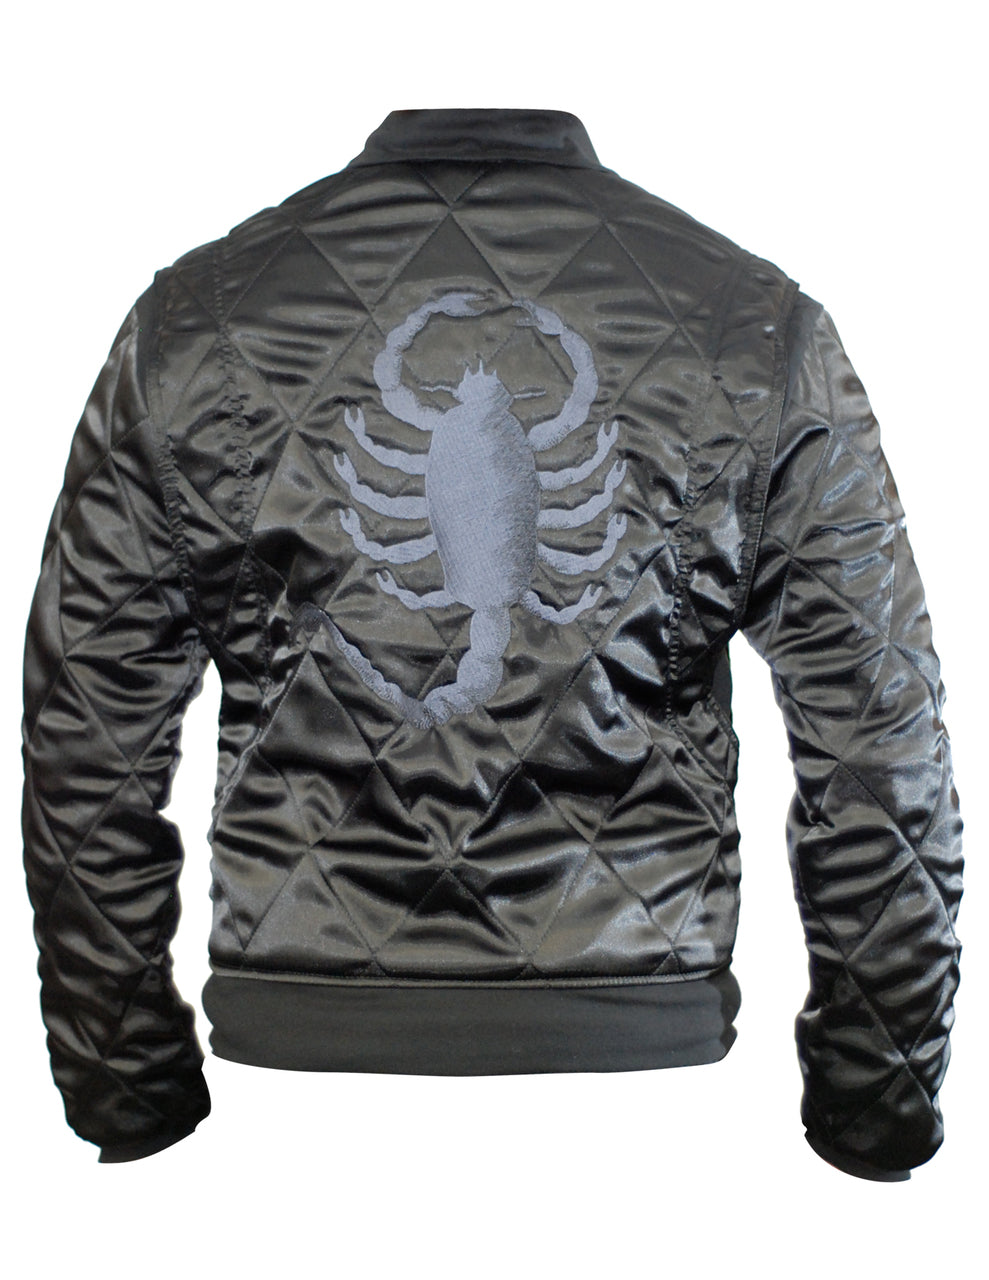 Buy Drive Jacket - Ryan Gosling Famous Drive Scorpion Jacket (XS) Ivory  White at Amazon.in